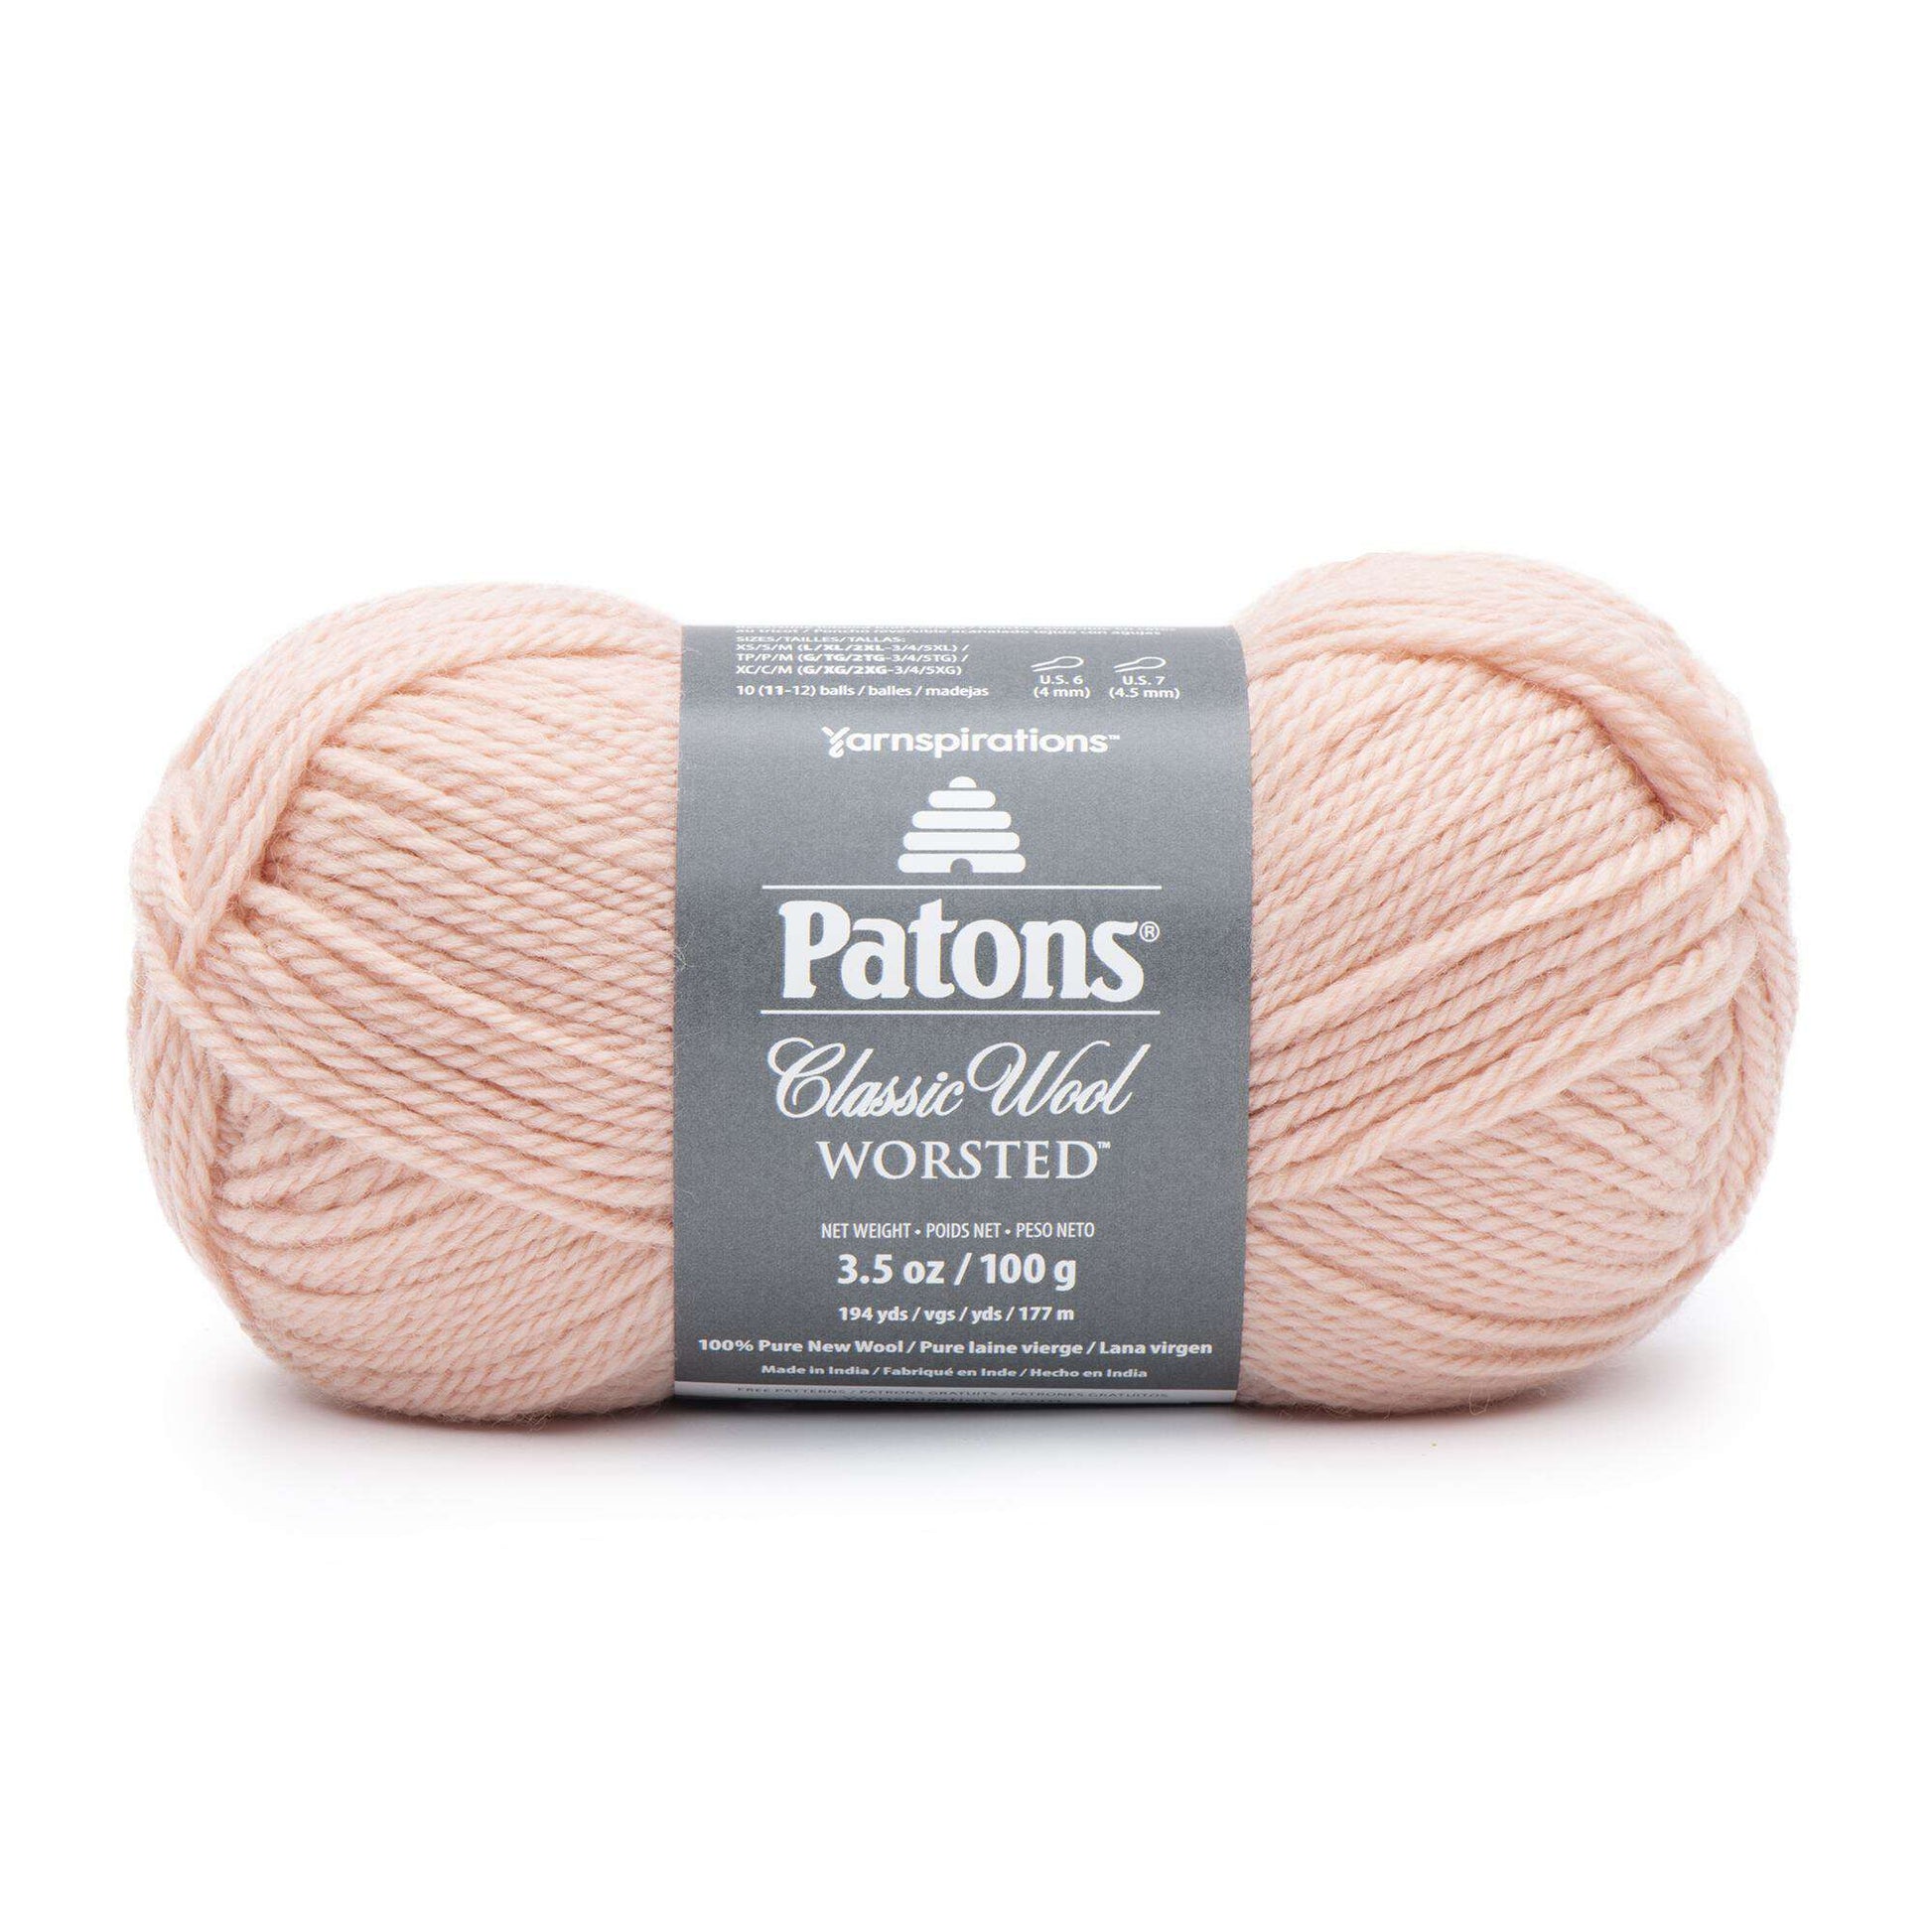 Patons Classic Wool Worsted Yarn | Yarnspirations